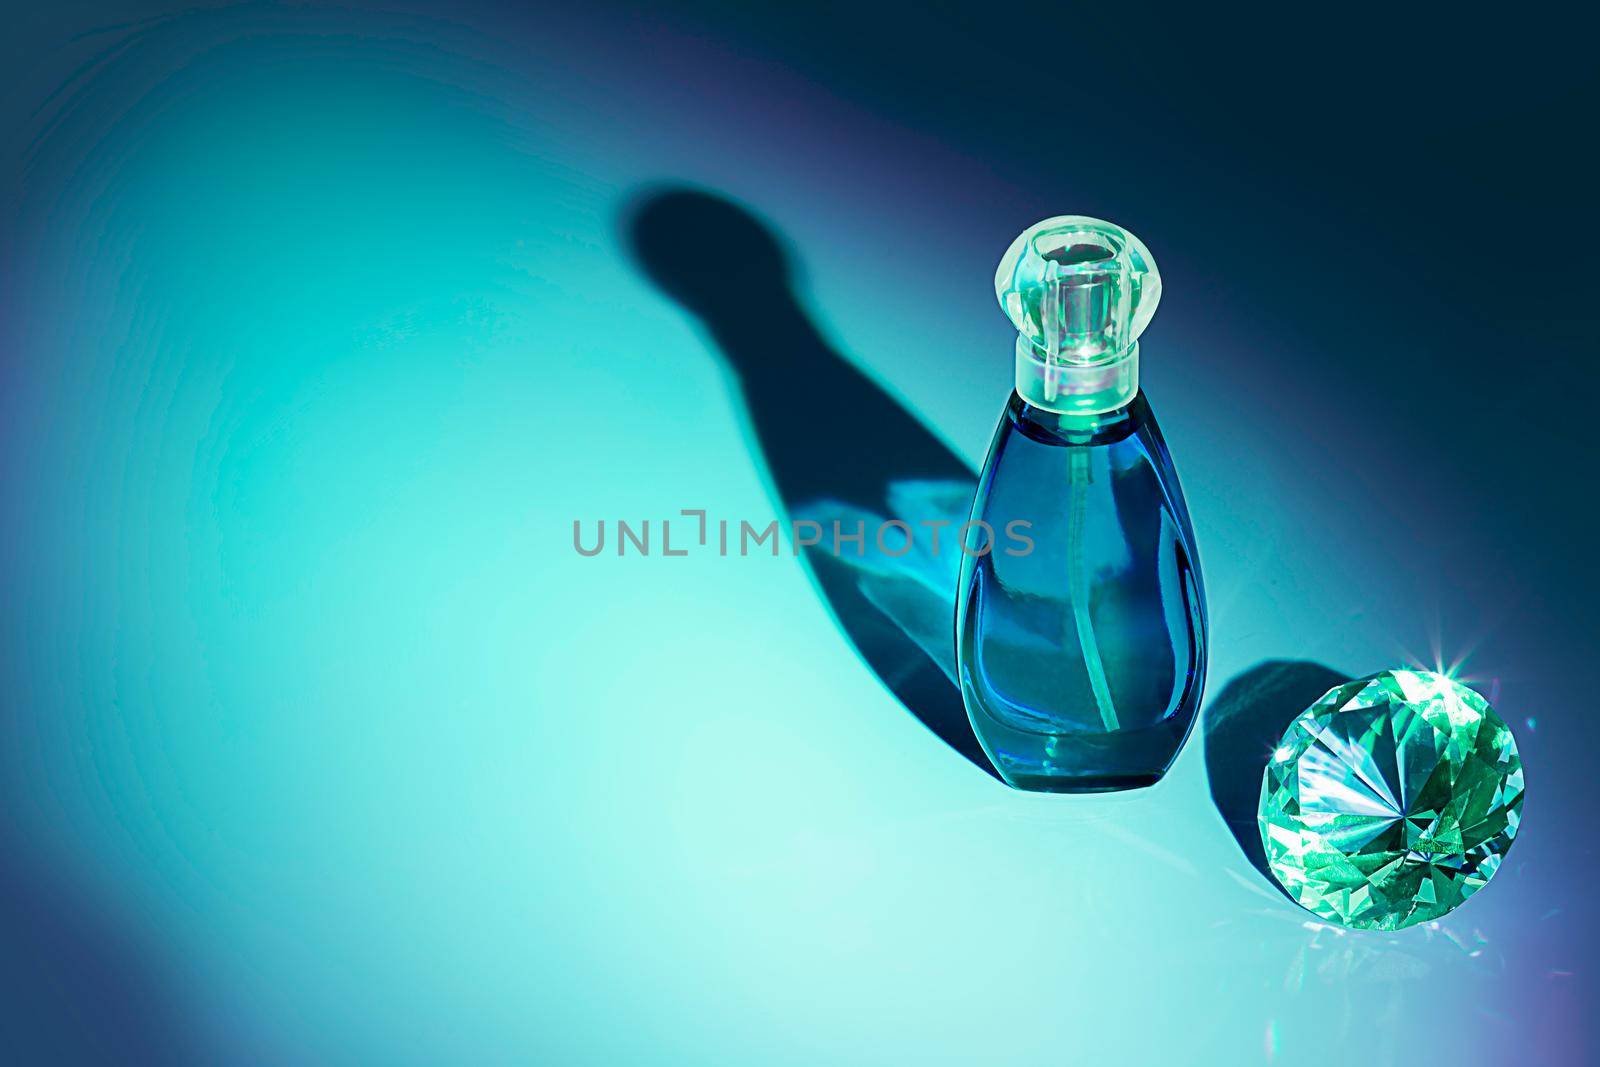 Perfume bottles studio shot on colored background with reflection. by galinasharapova